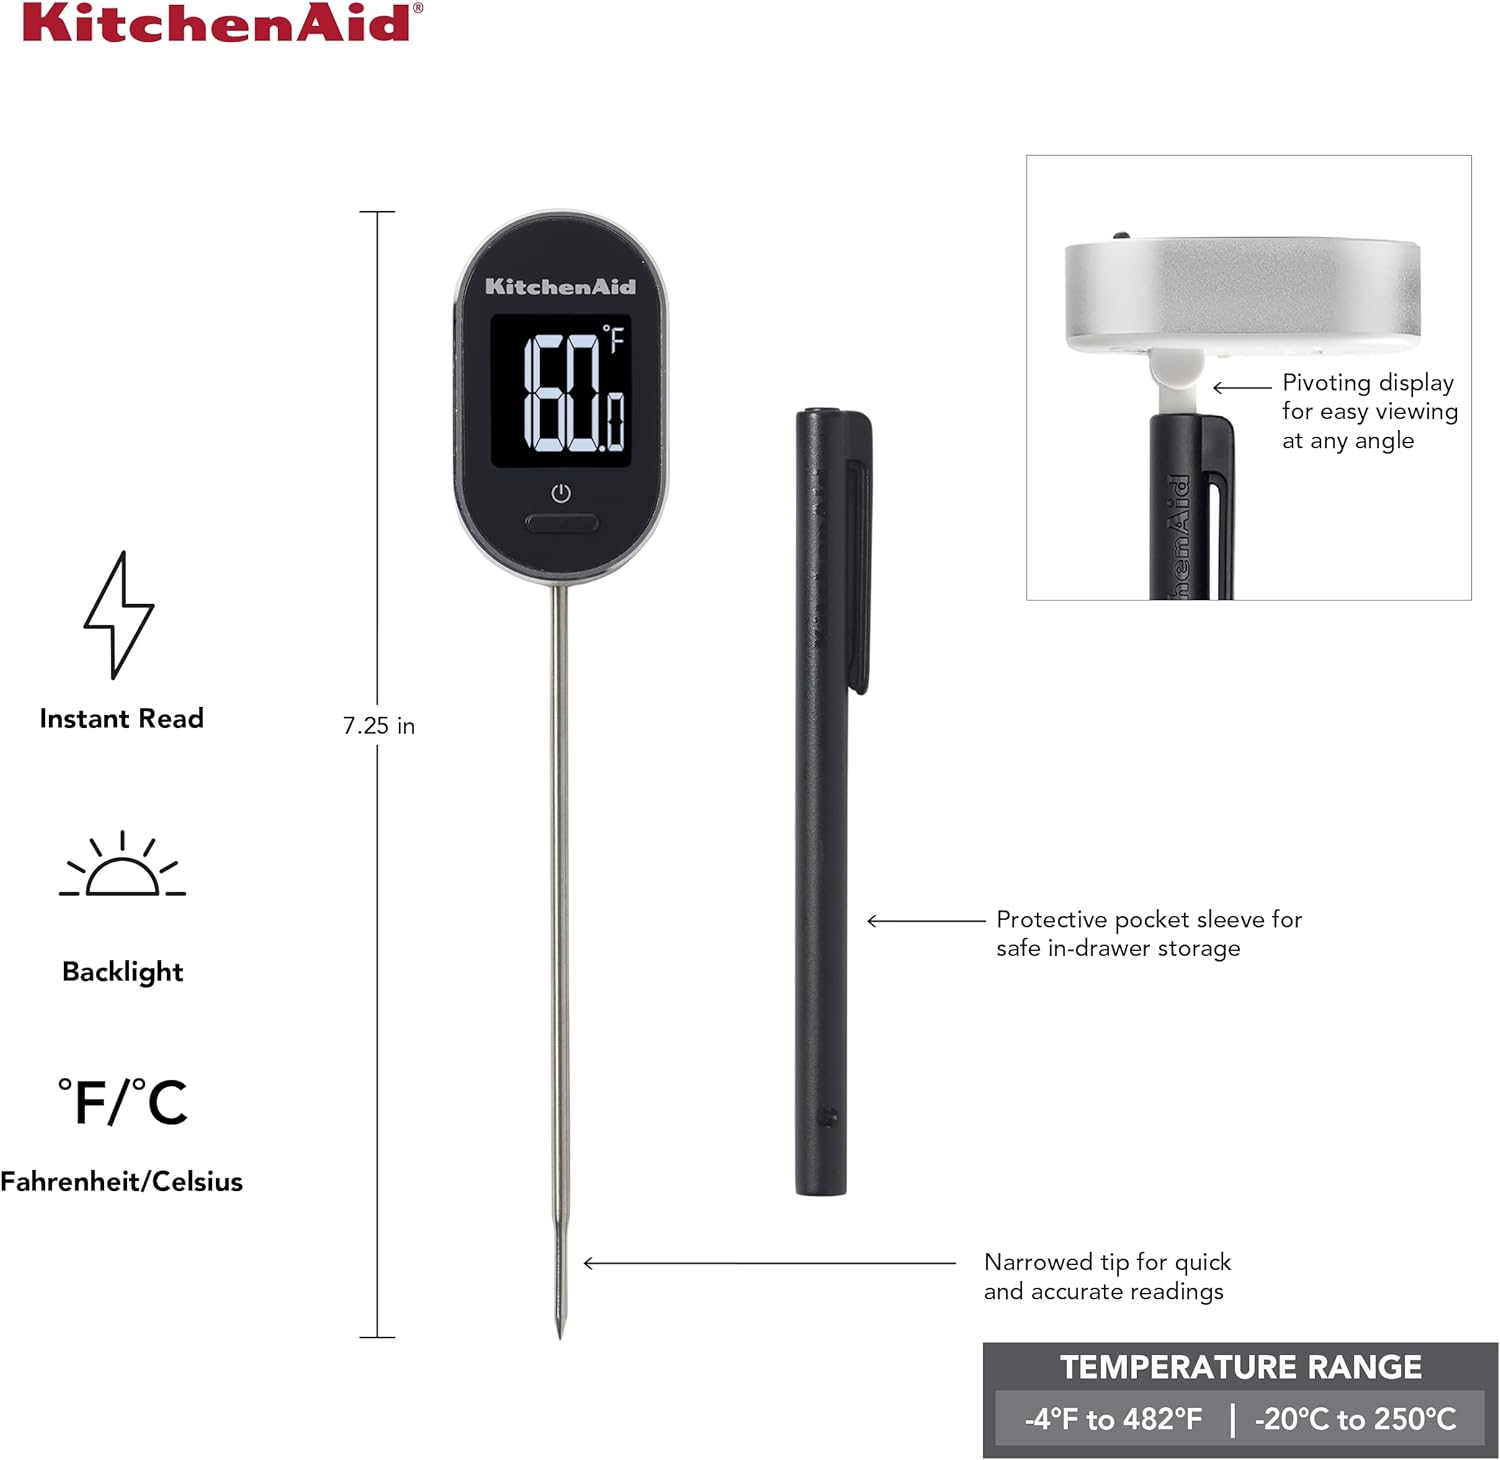 KitchenAid KQ904 Digital Instant Read Kitchen and Food Thermometer, TEMPERATURE RANGE: -40F to 482F, Black